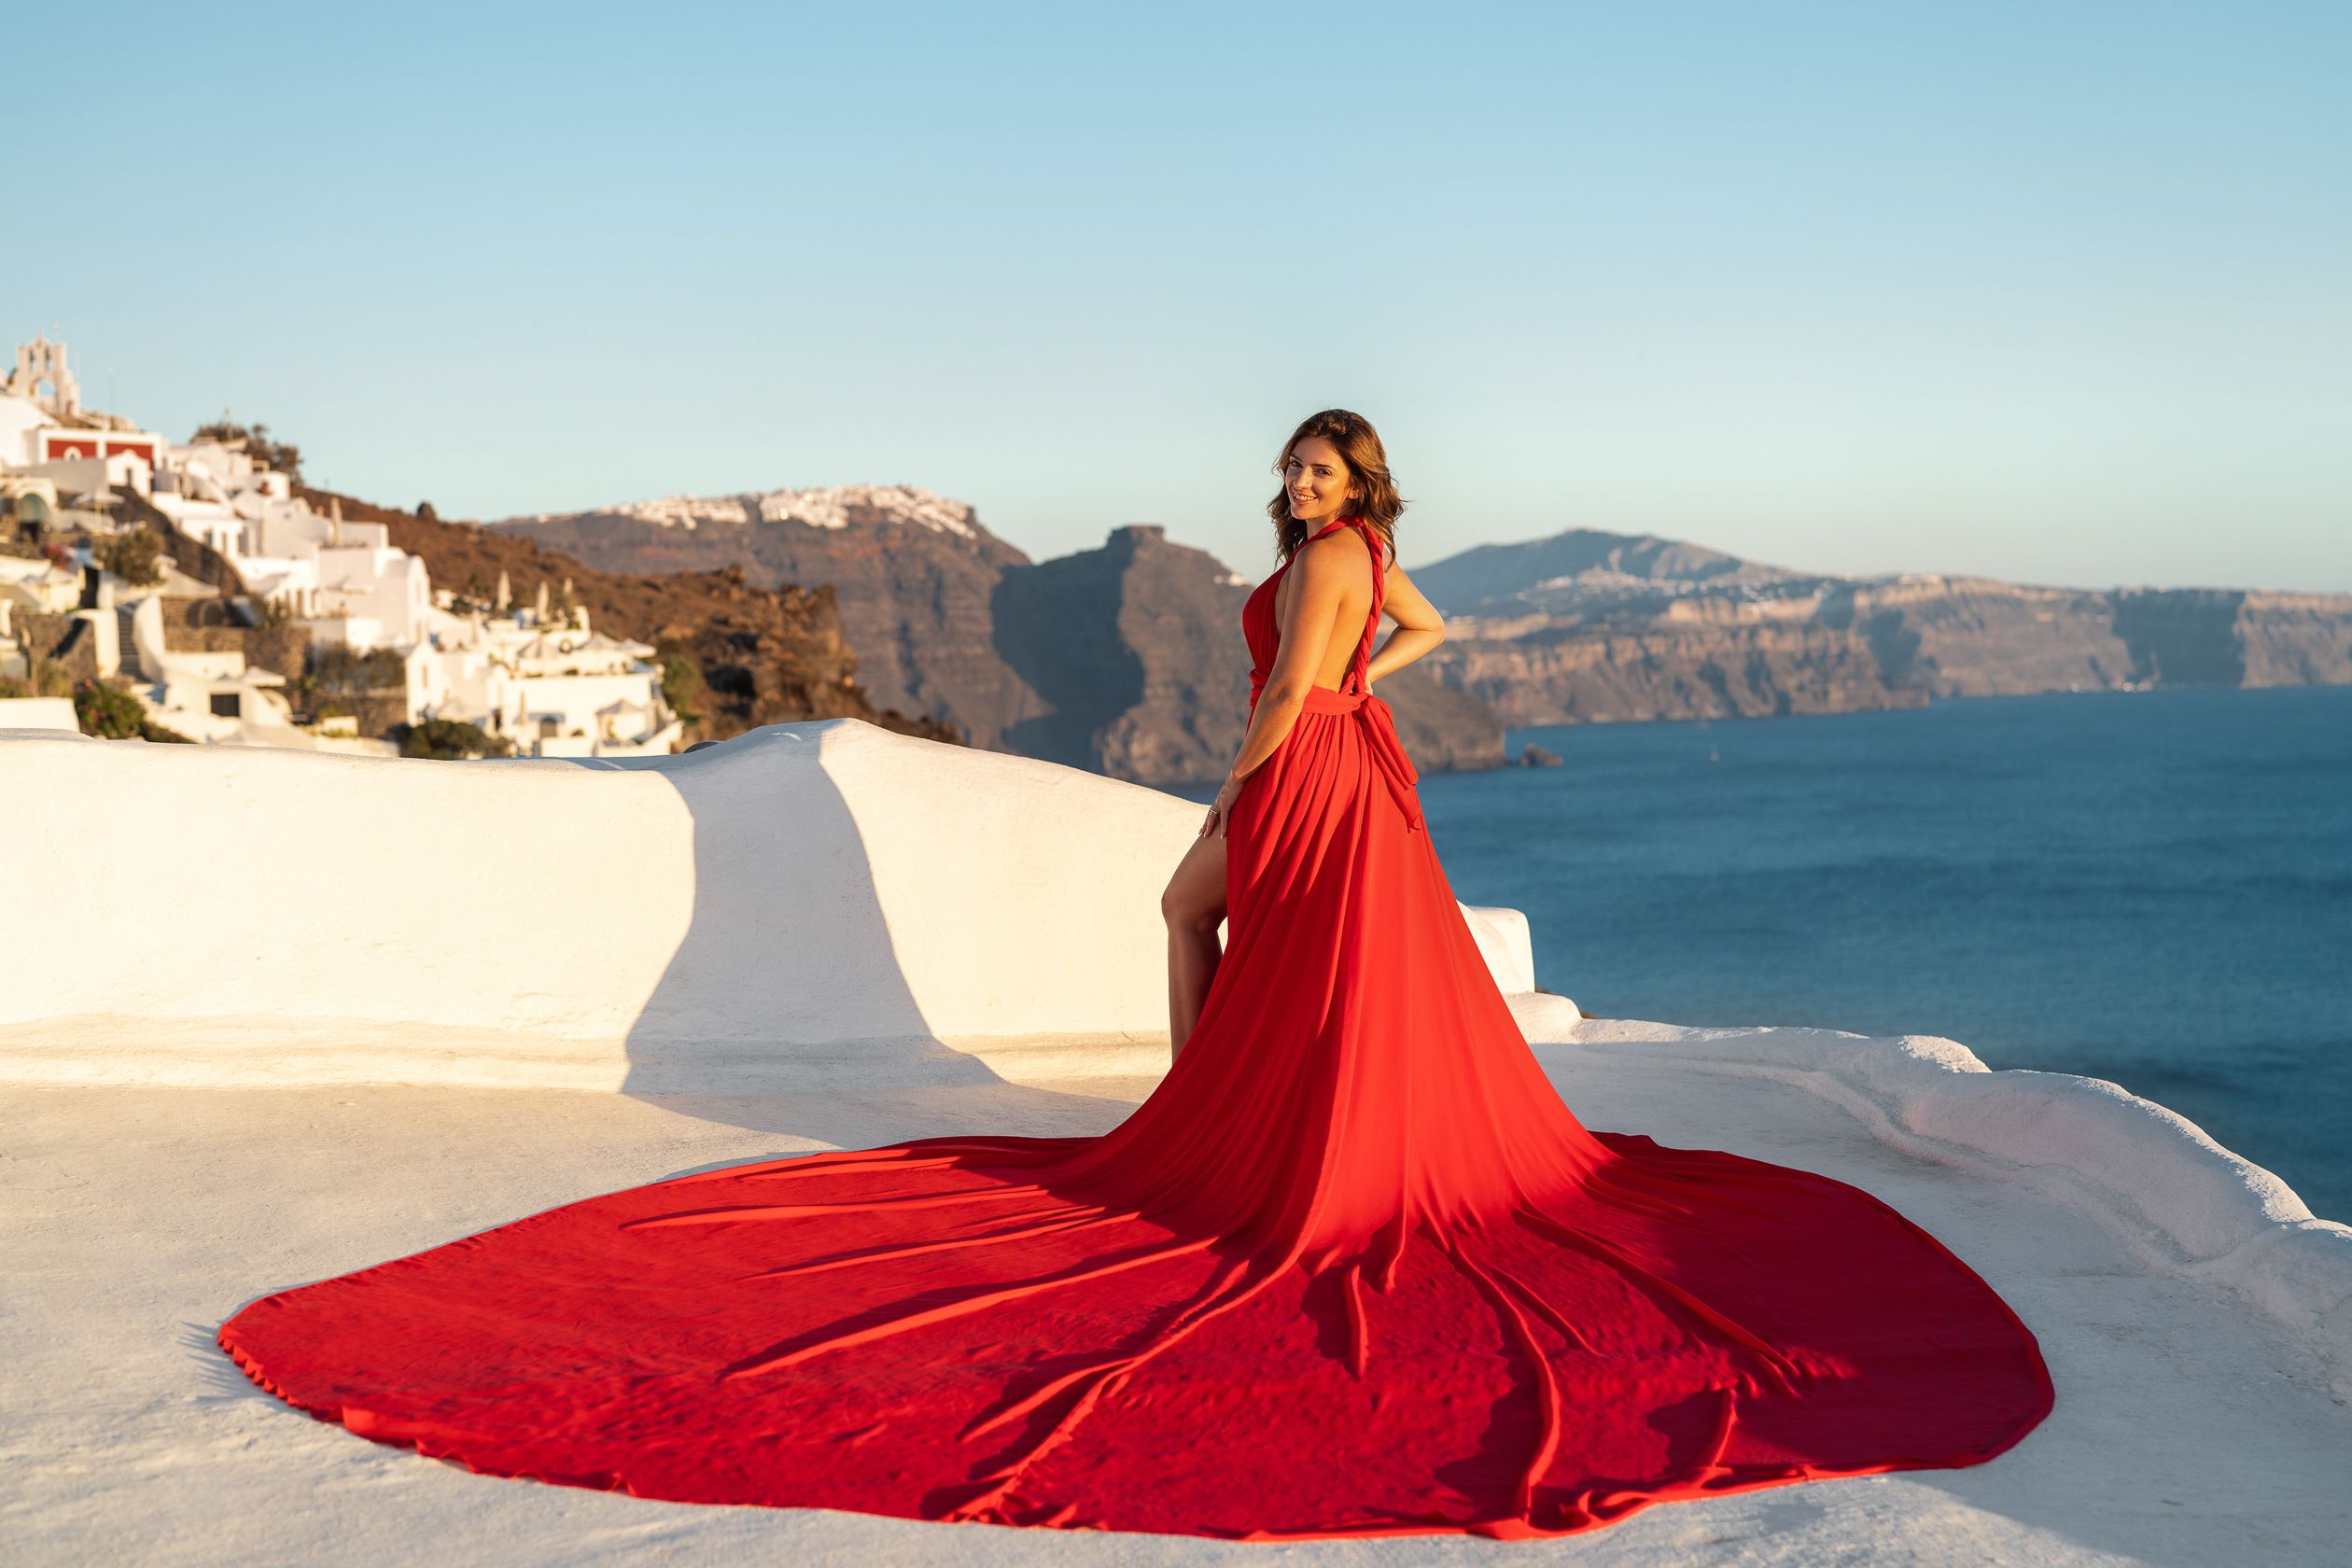 Flying Santorini red dress photoshoot in Oia